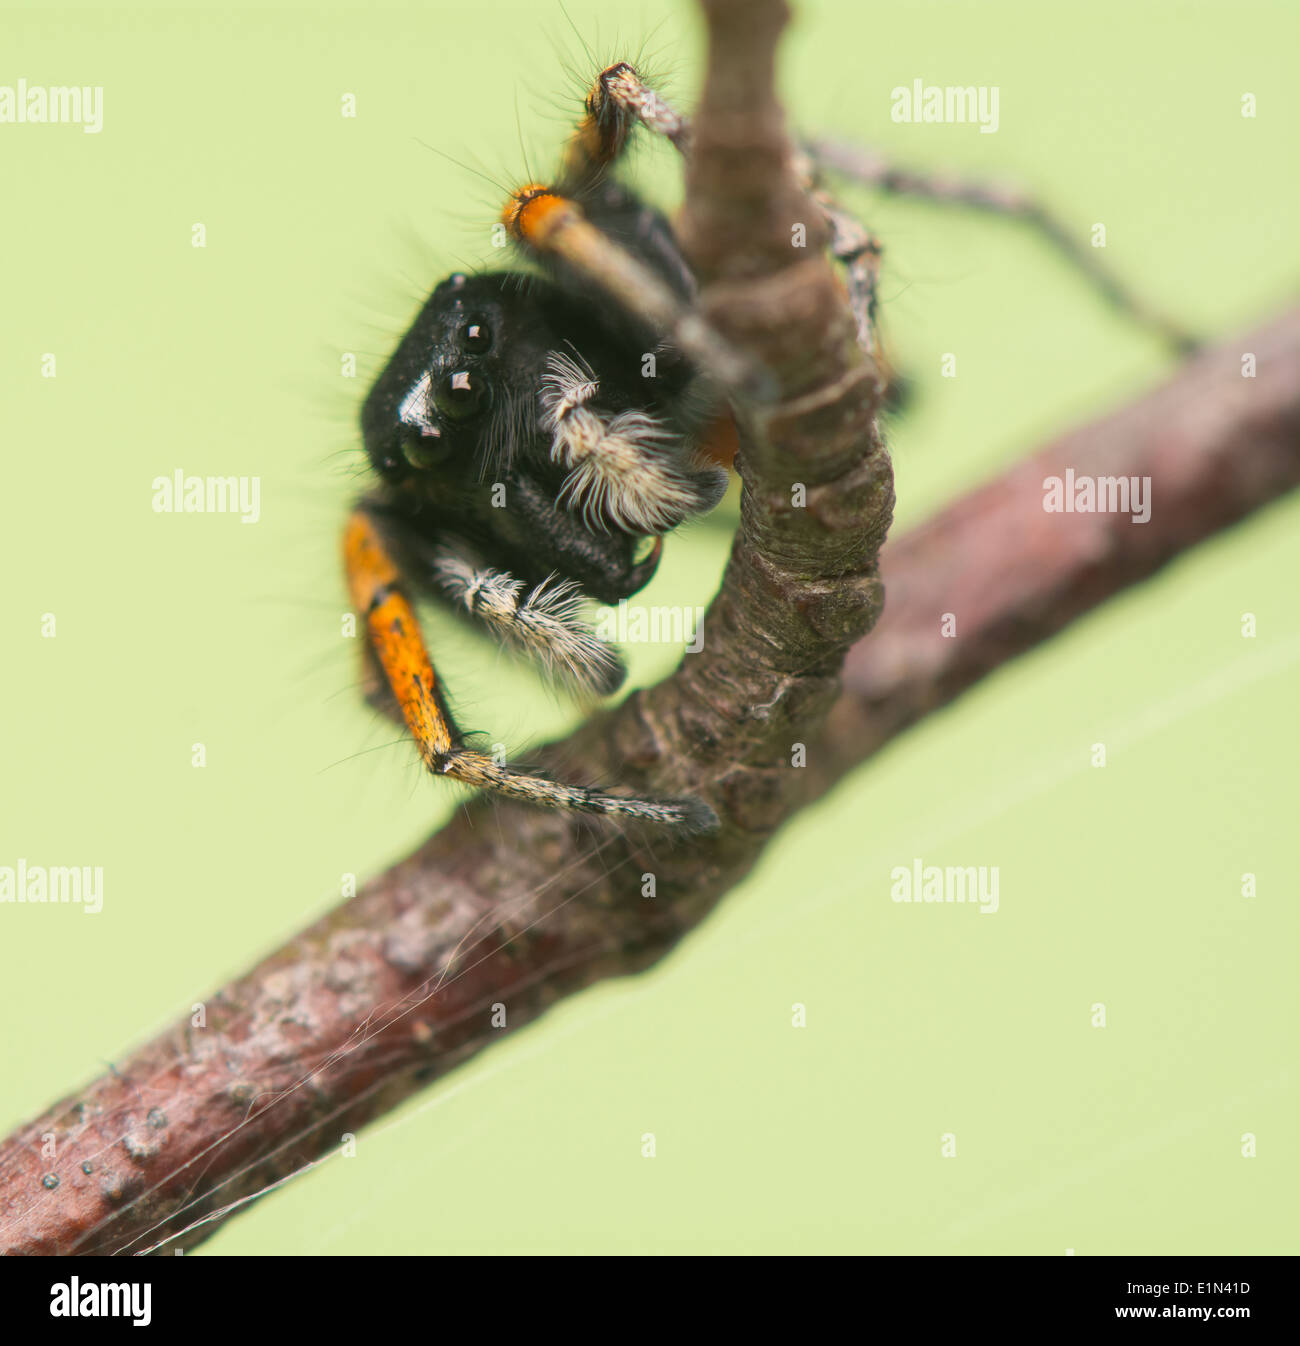 Philaeus chrysops - Jumping spider Foto de stock